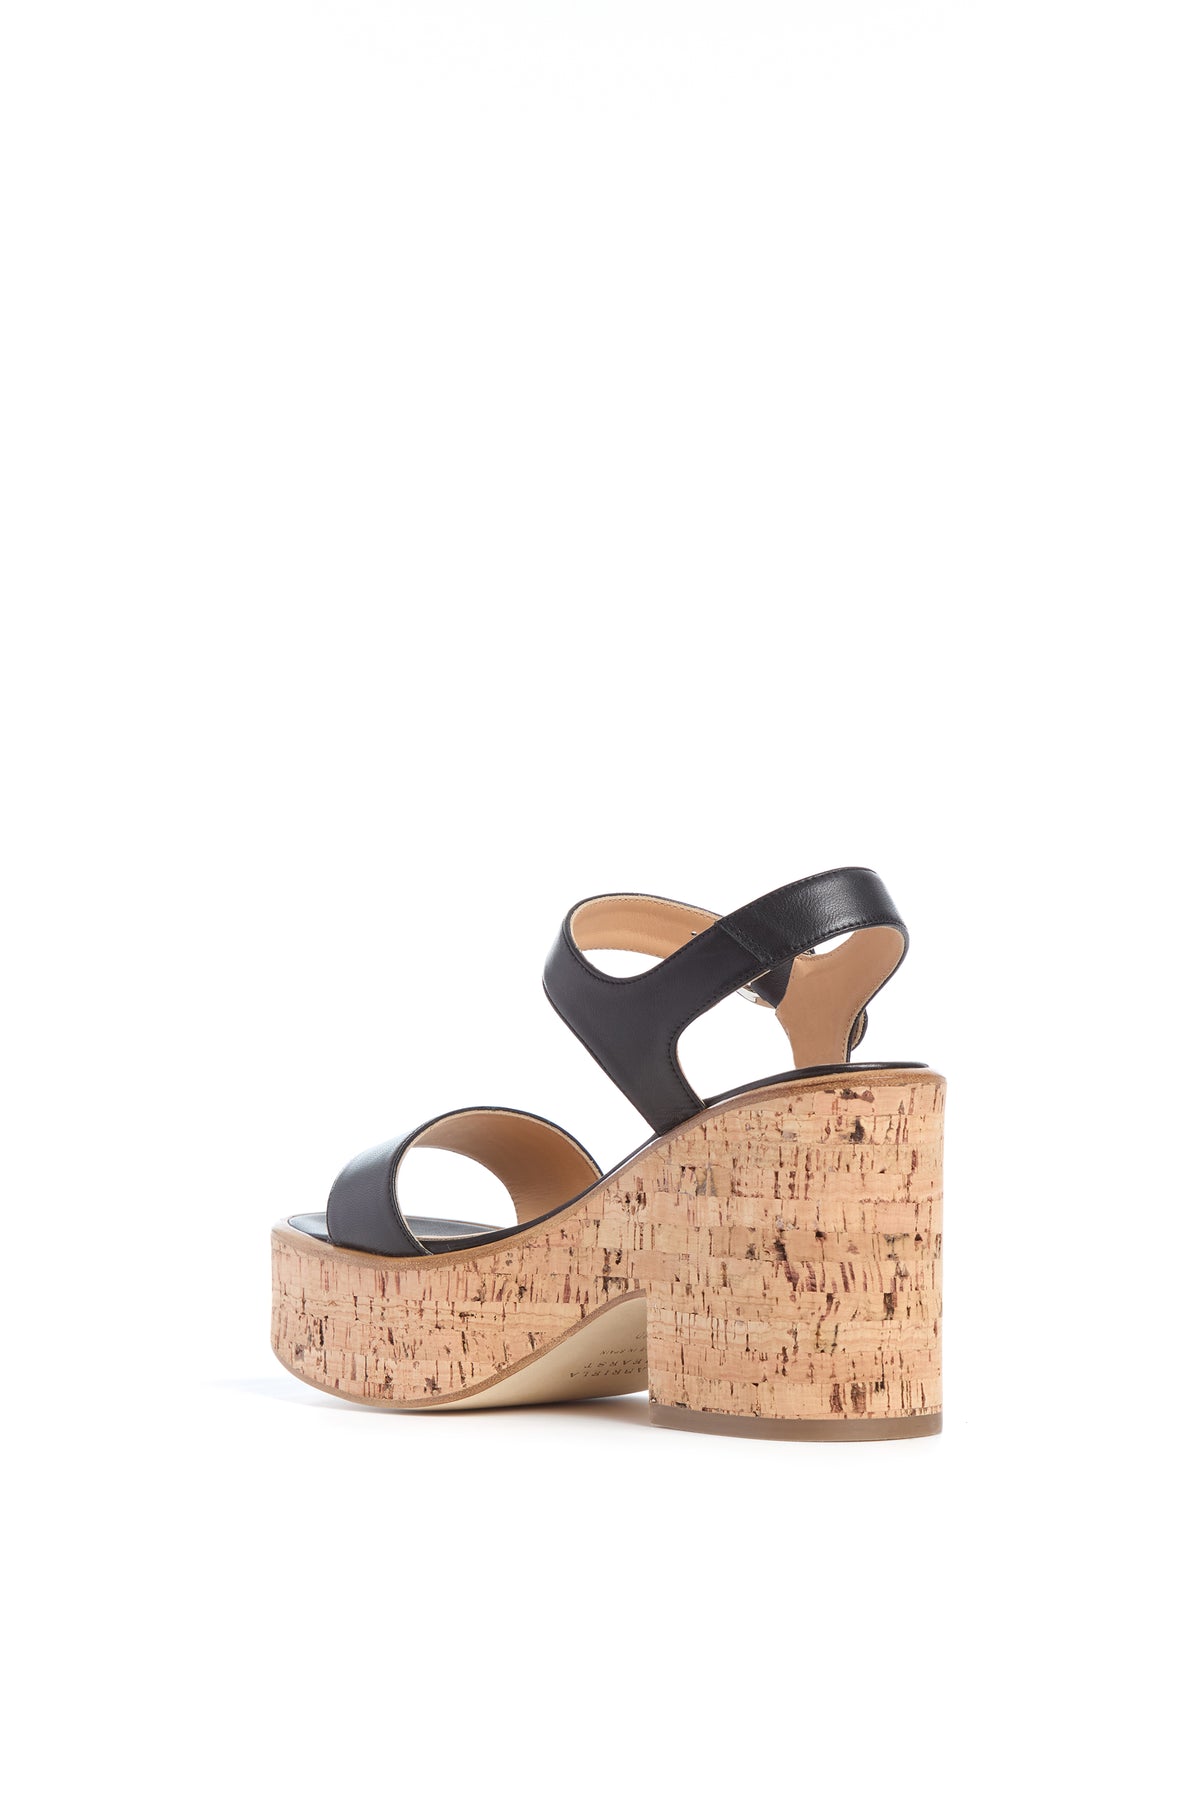 Sardis Platform Sandal in Black Nappa Leather